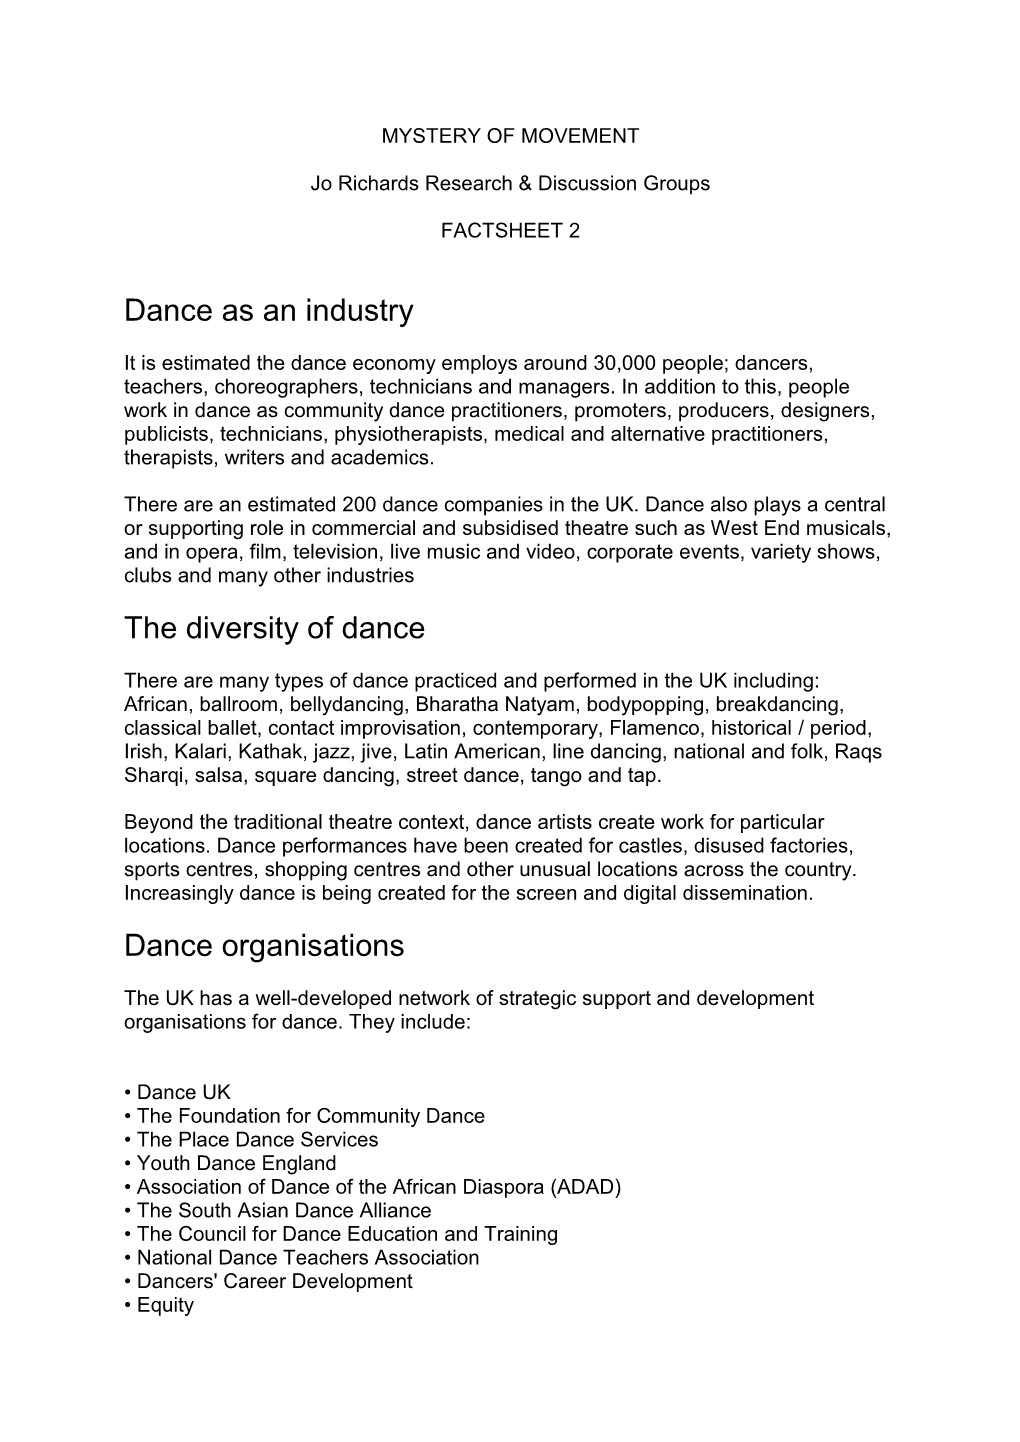 Dance As an Industry